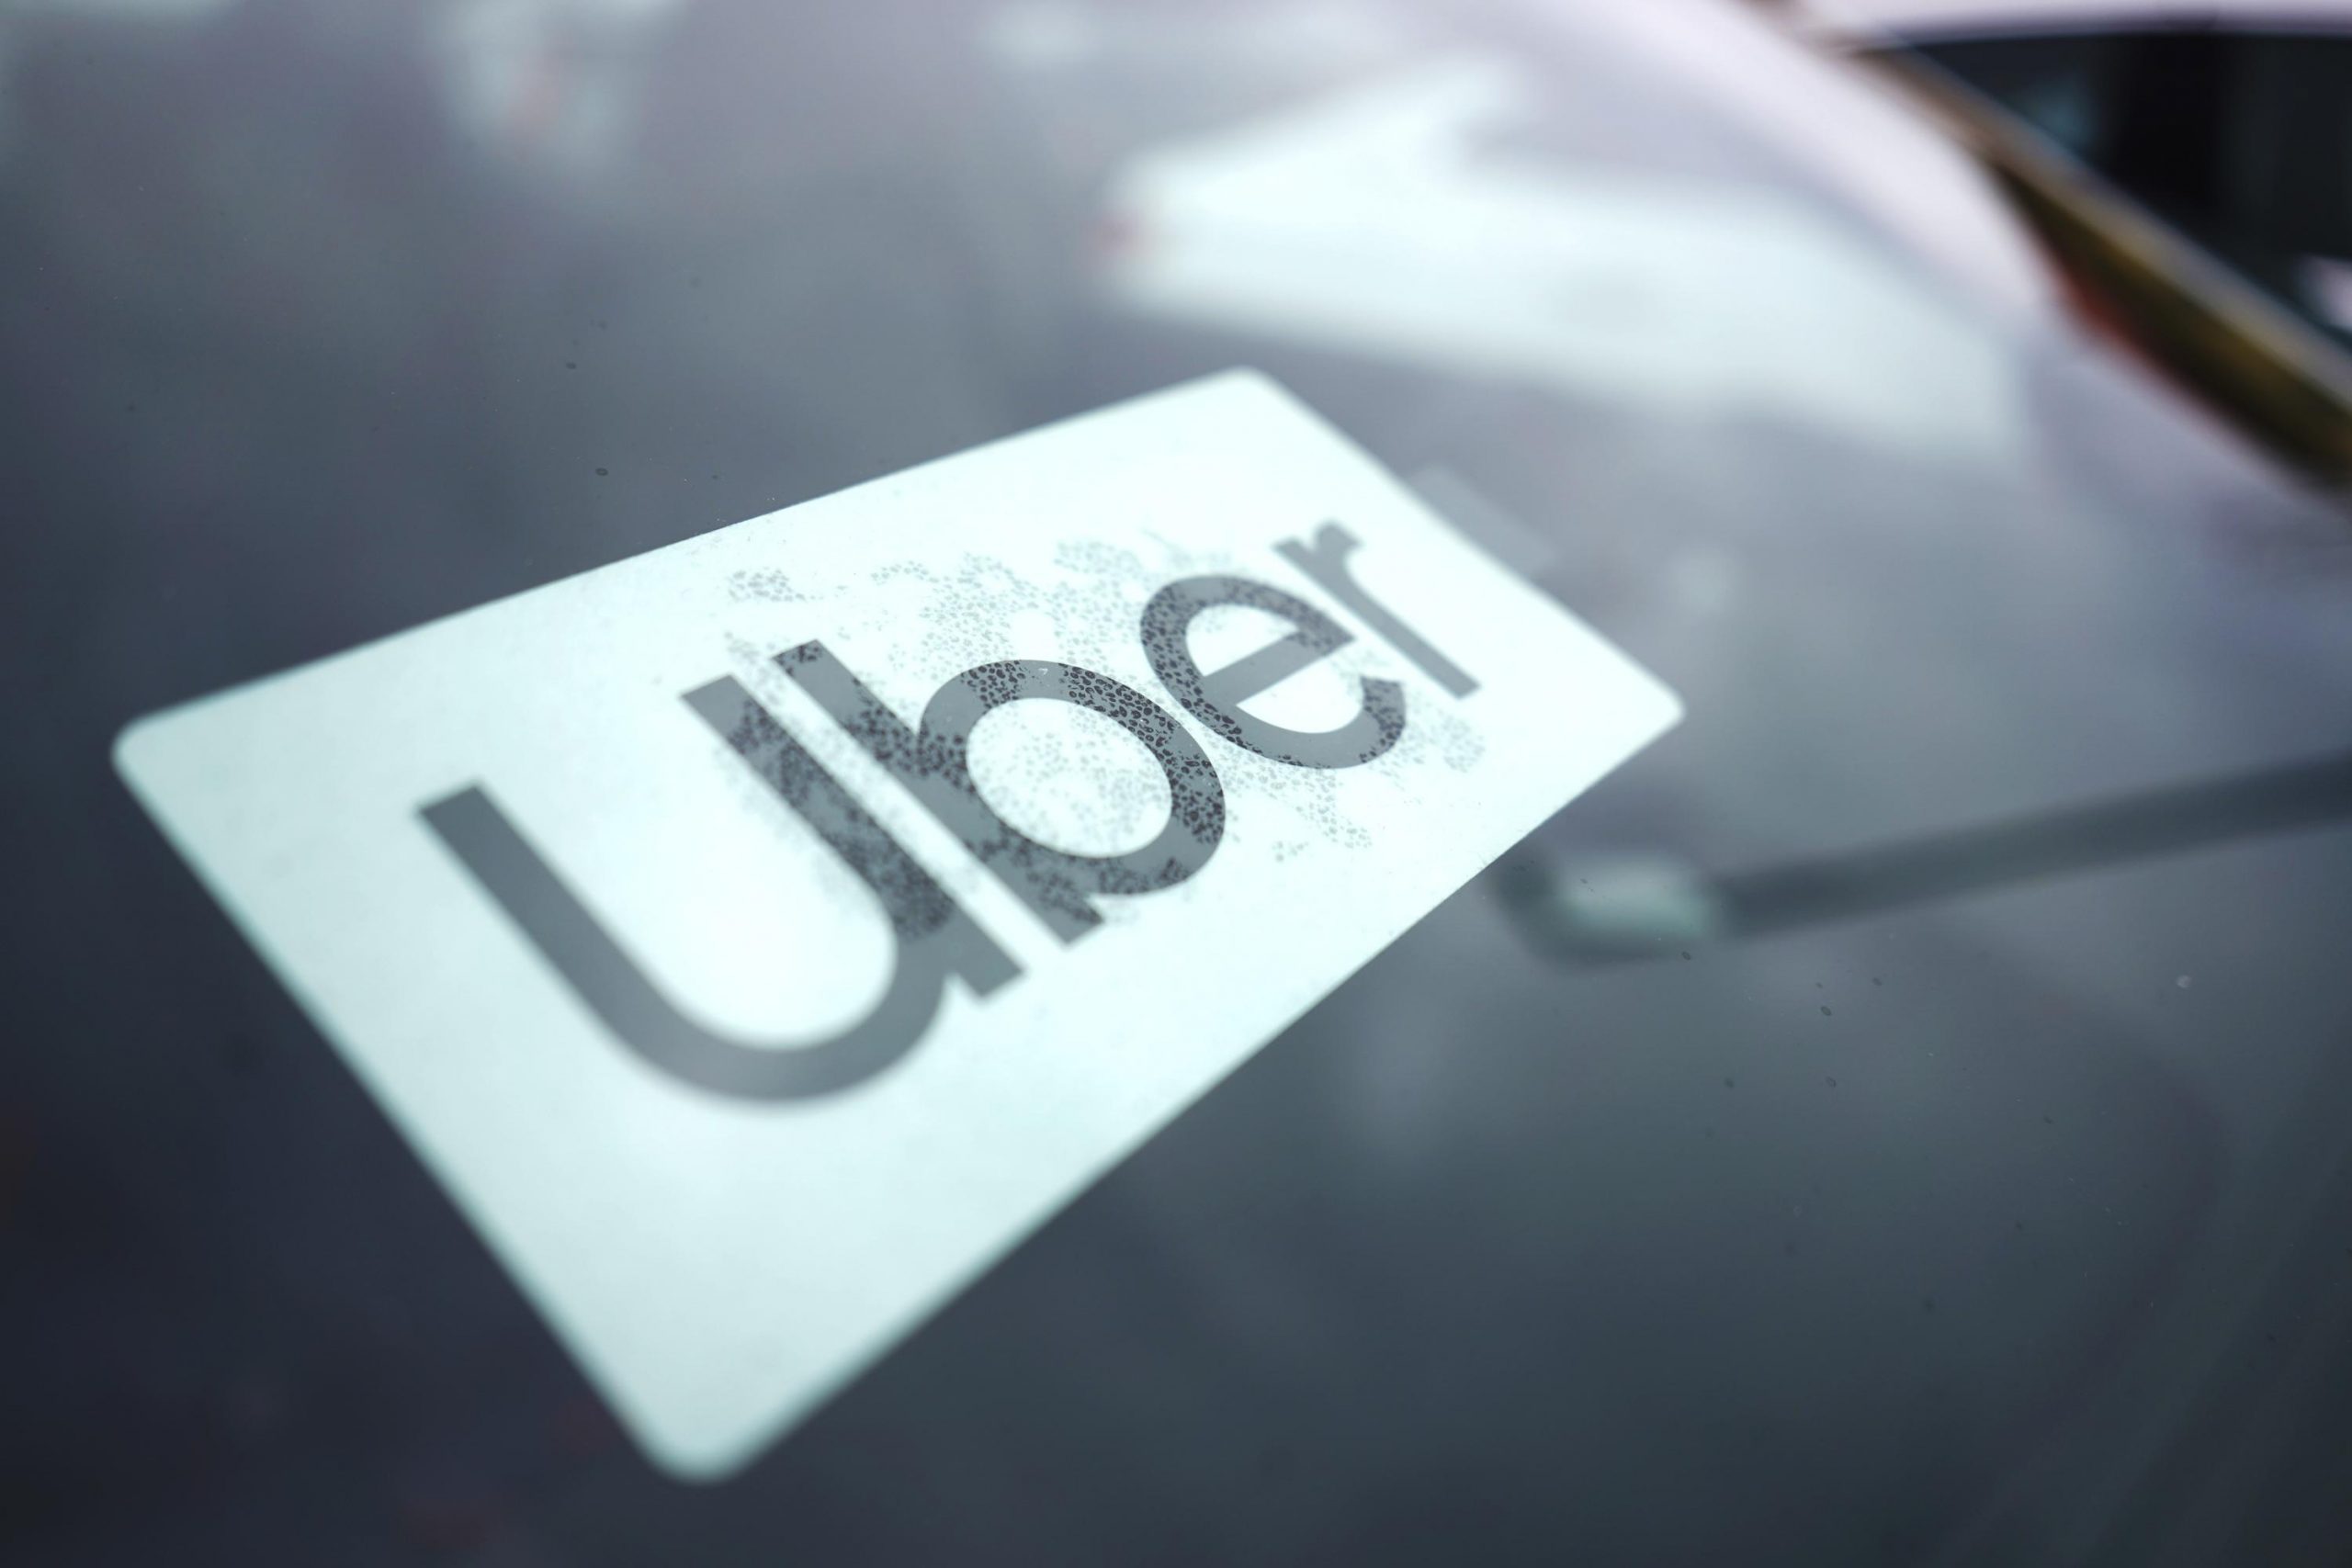 H Uber, οι σχέσεις με την πολιτική και το ύστερο μοντέλο της εργασιακής εκμετάλλευσης